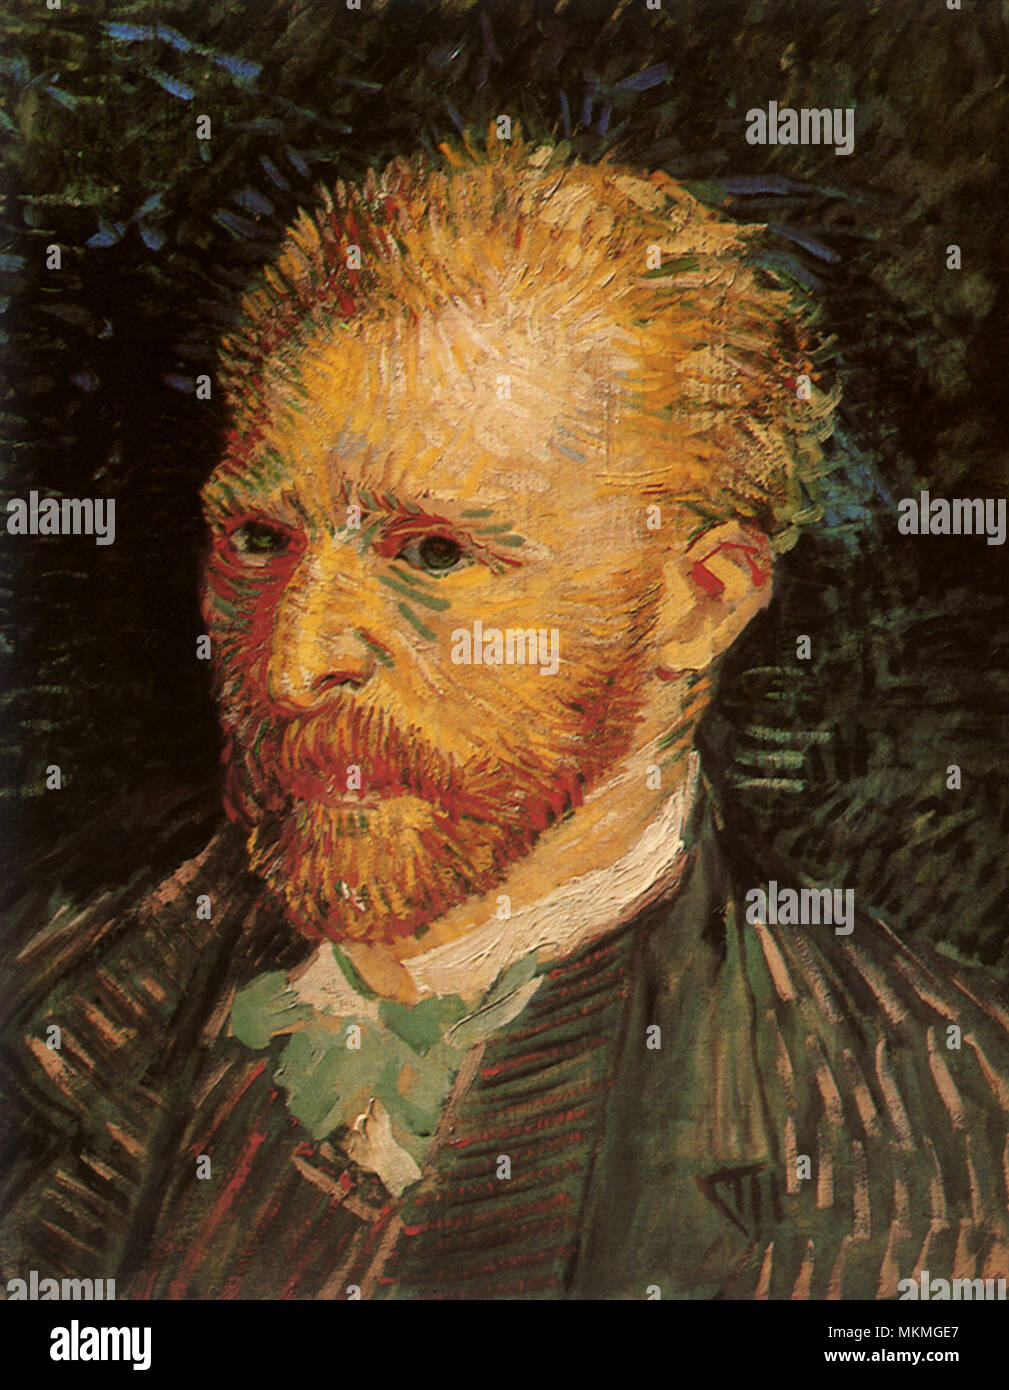 Van Gogh autoritratto Foto Stock